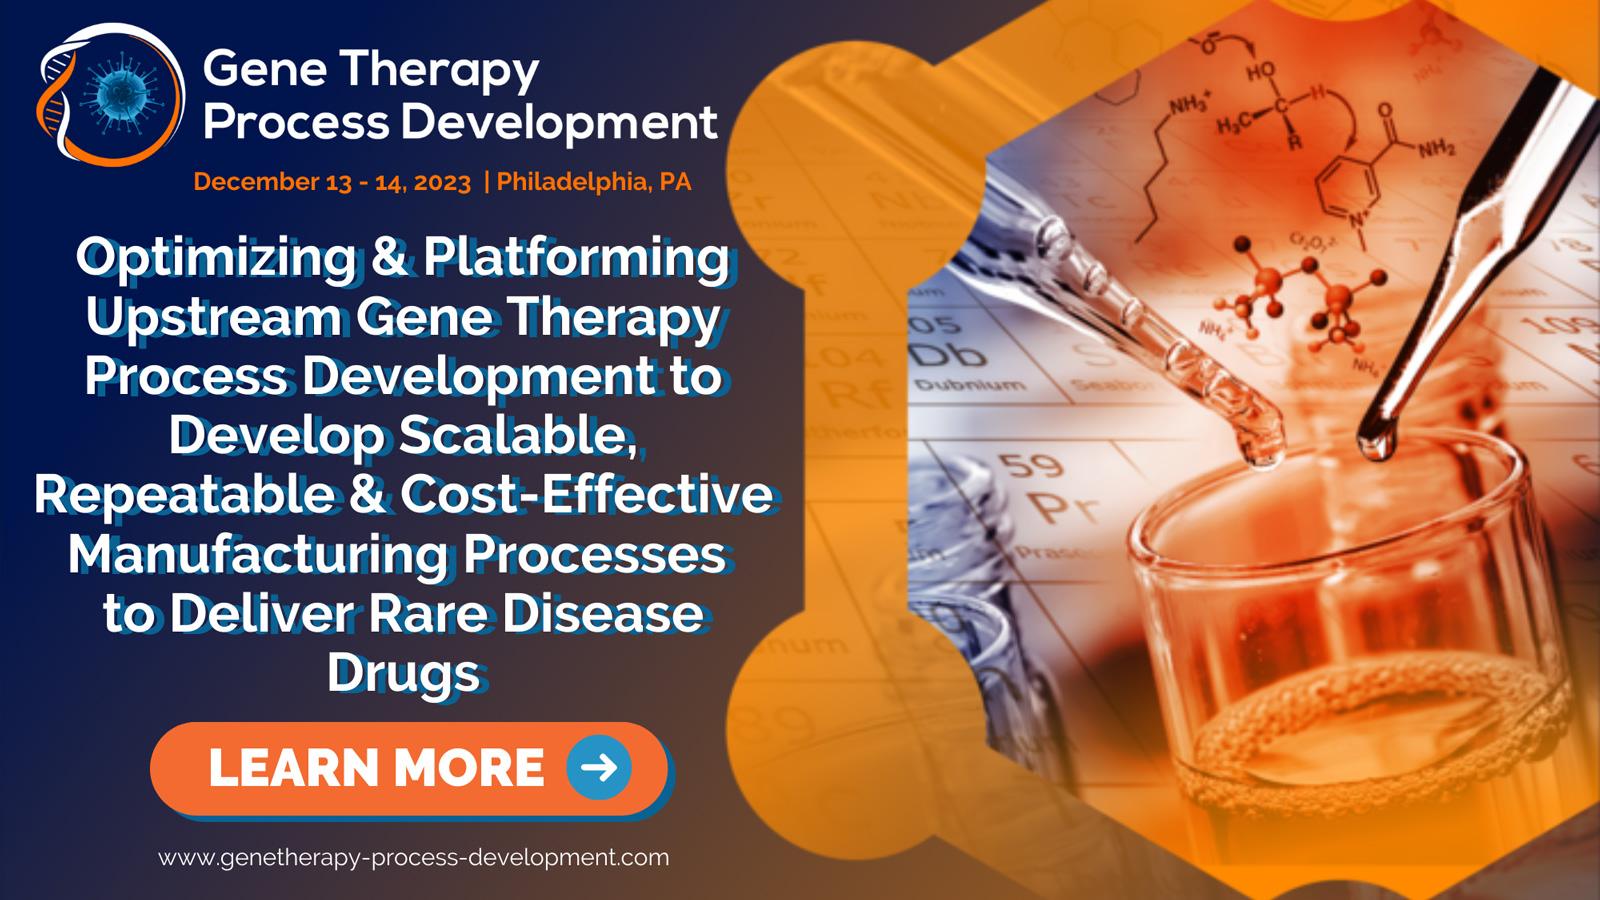 Gene Therapy Process Development Summit